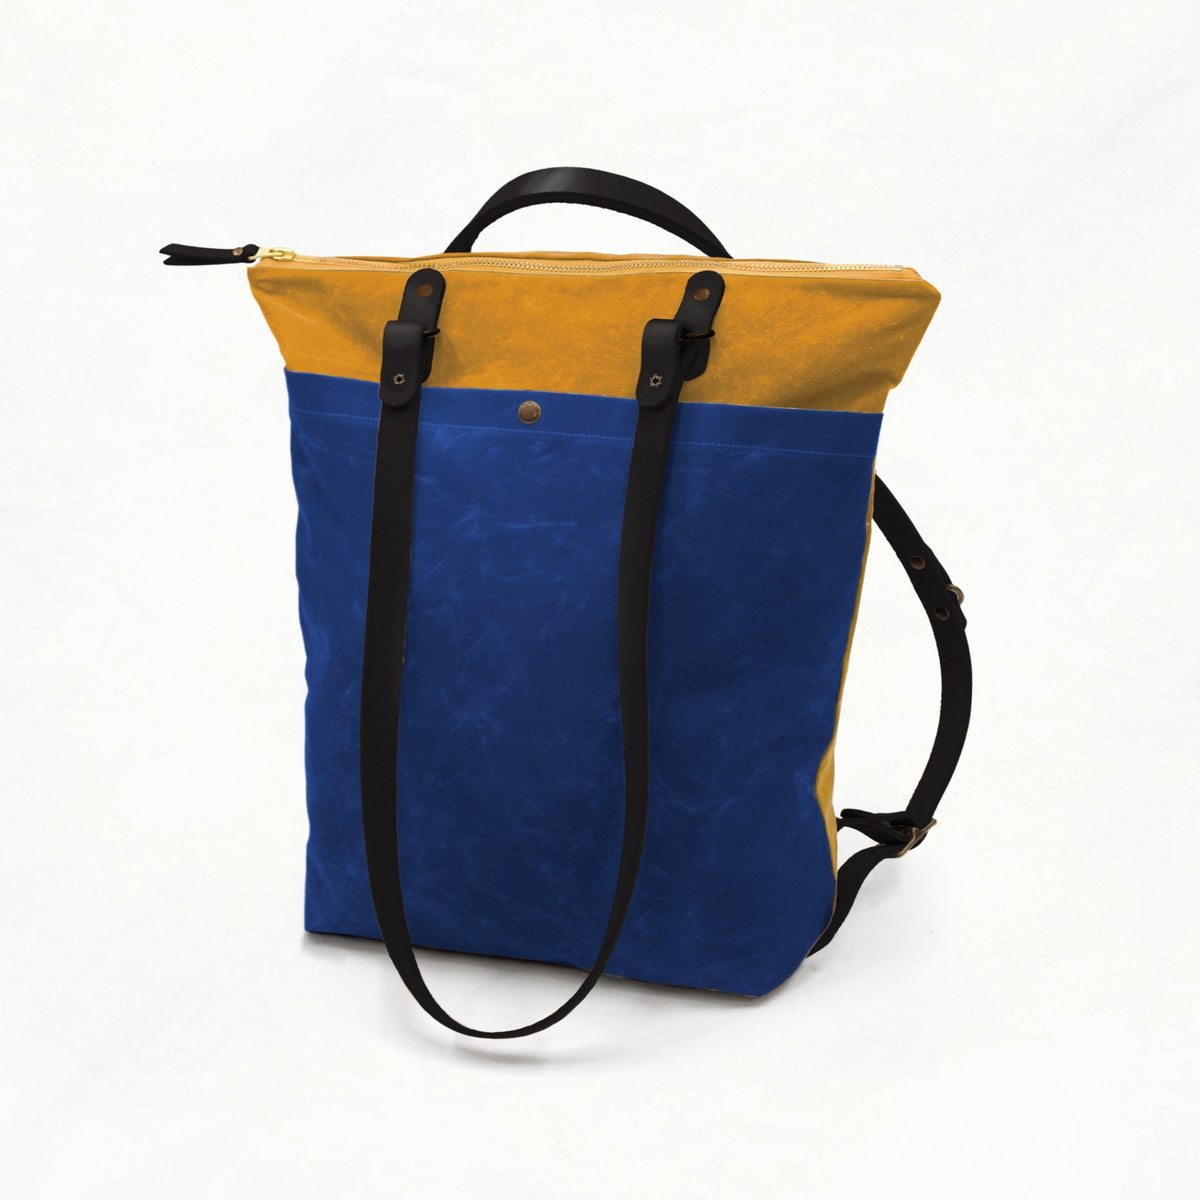 Maywood - Mustard Bag Maker Kit - MAY - MUS - COB - BLA - AB - MUS - Maker Kit - Klum House